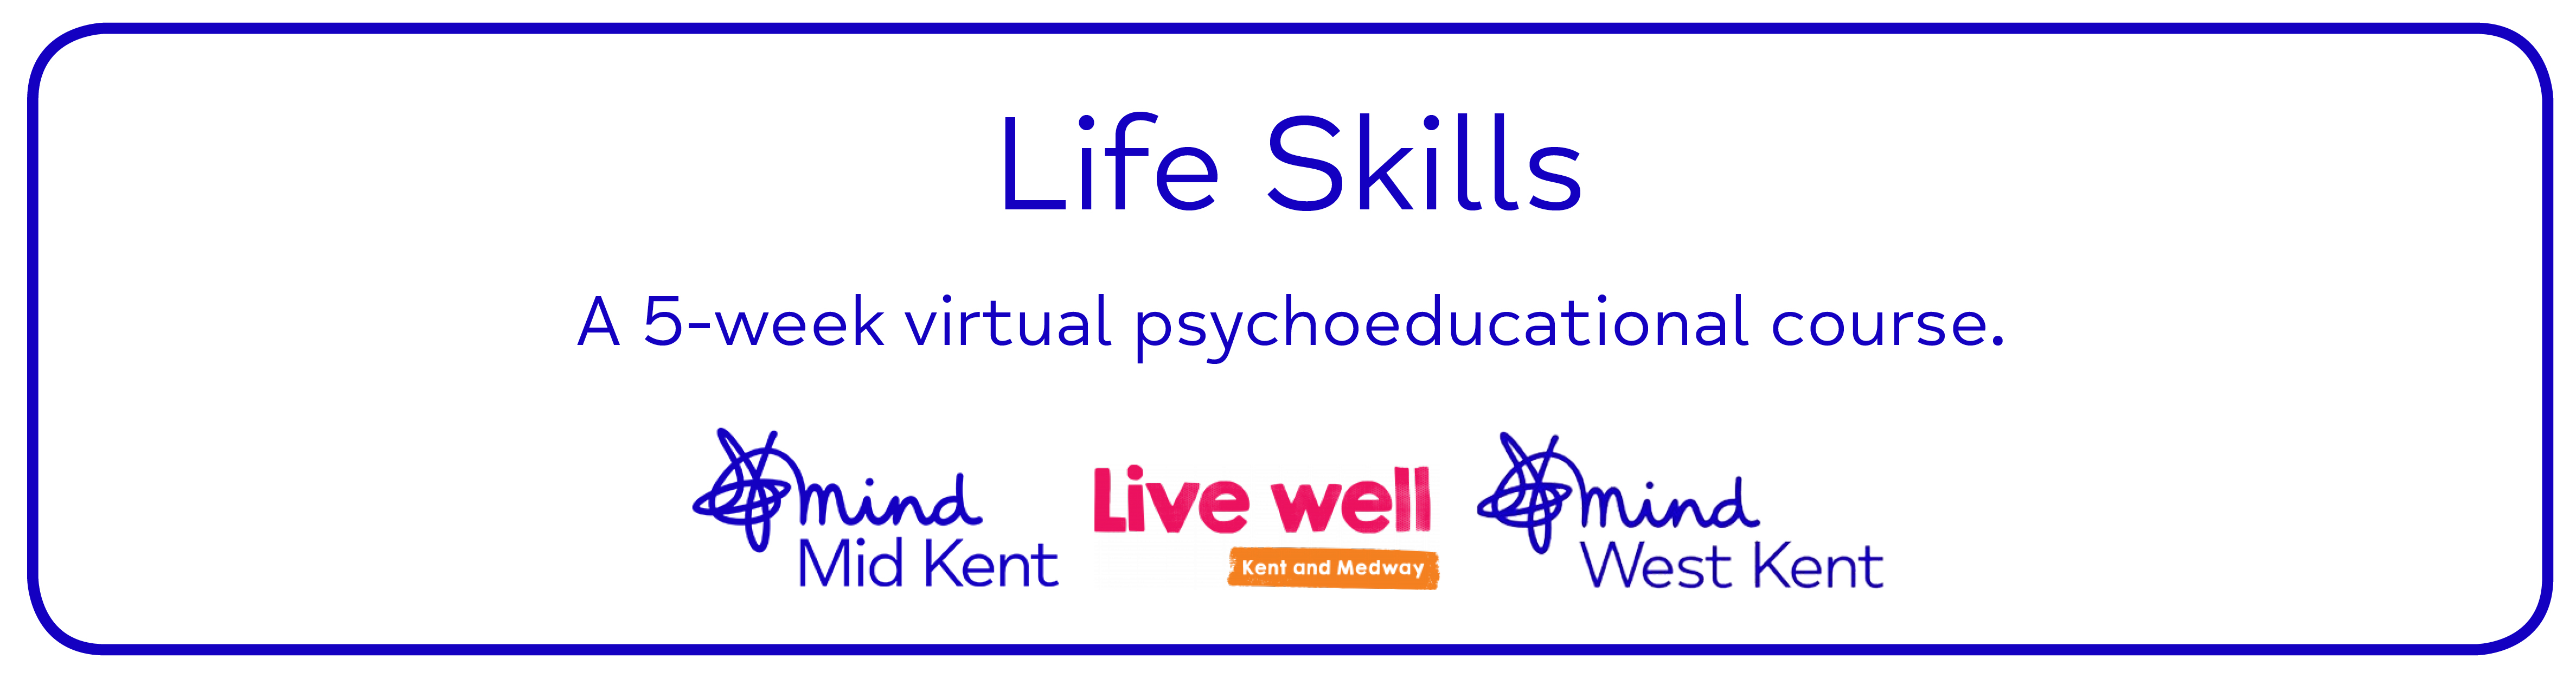 Life Skills A 5-week virtual psychoeducational course.